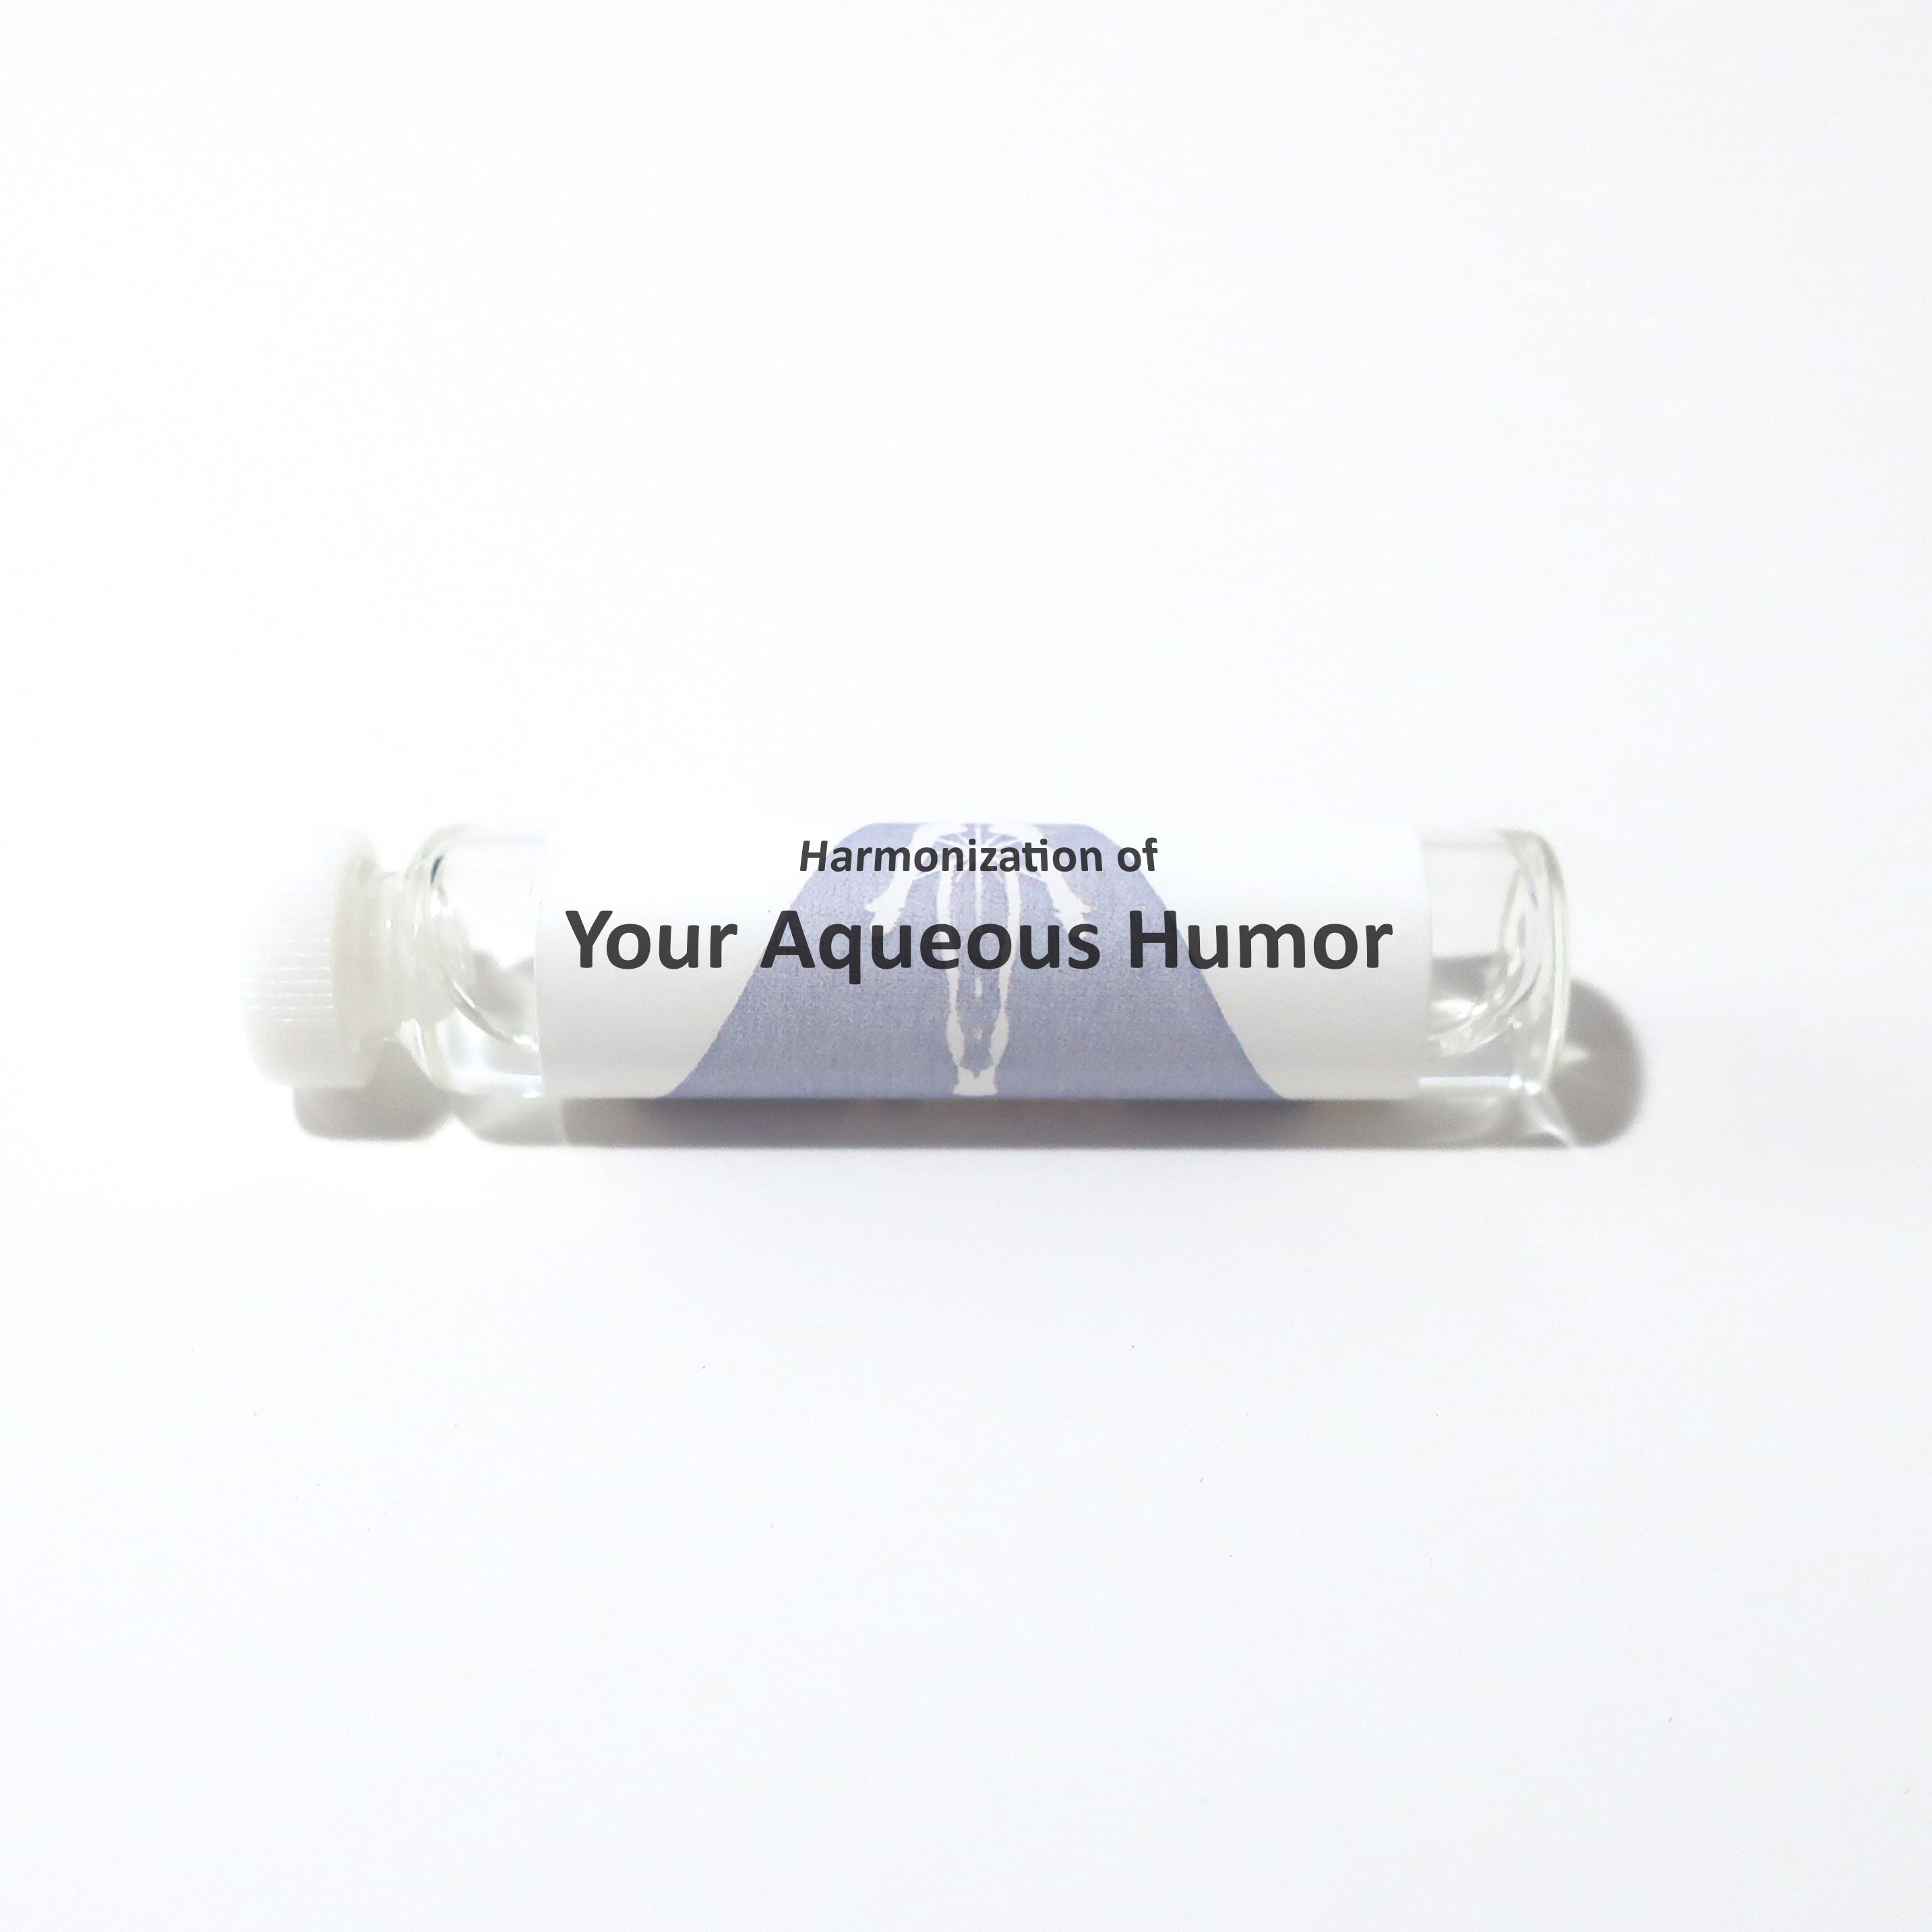 Your Aqueous Humor